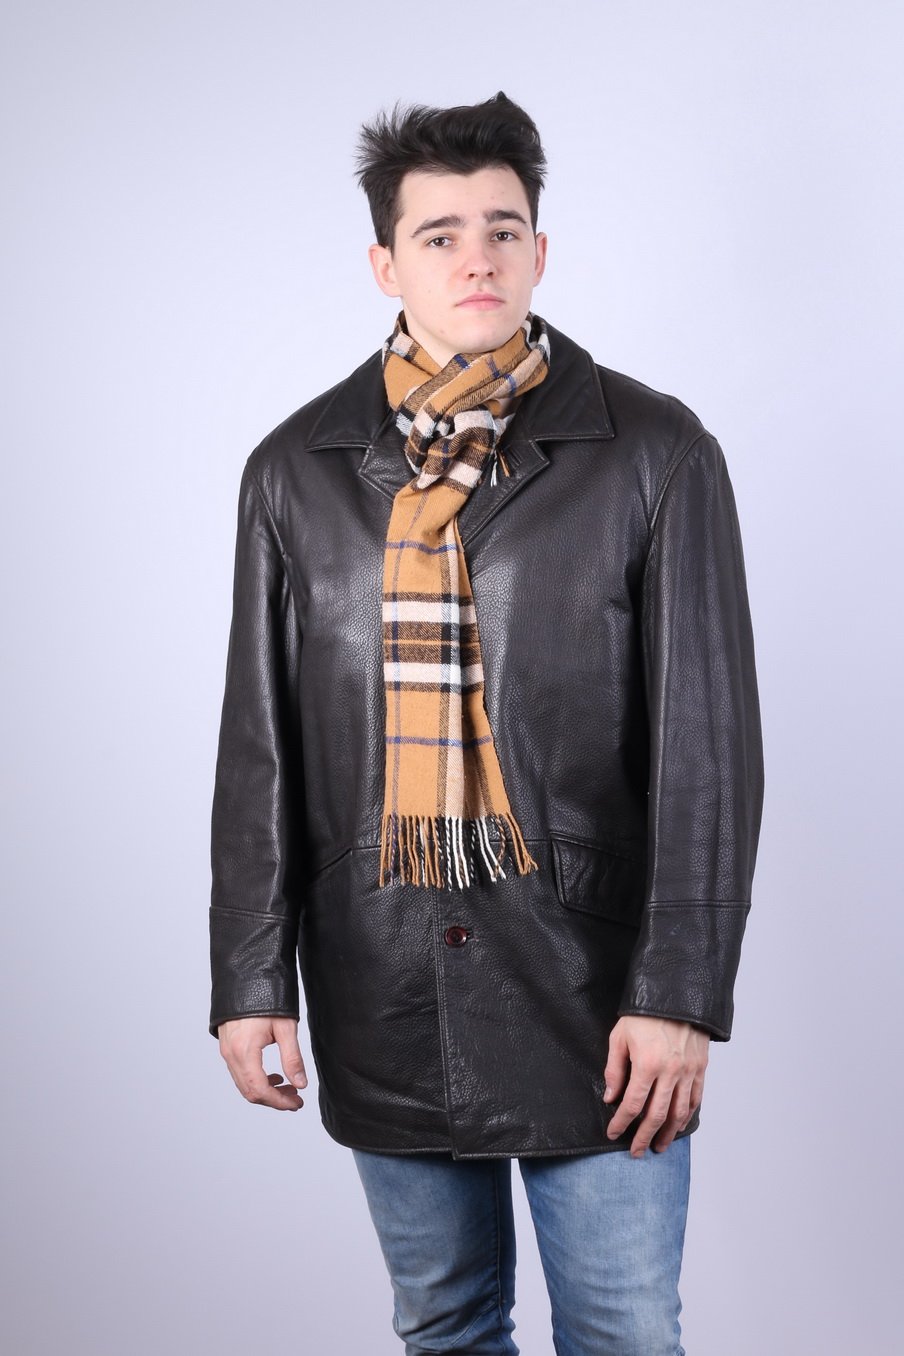 Atwardson Finest Men 50 XXL Jacket Dark Brown Leather Vintage Single Breasted Top